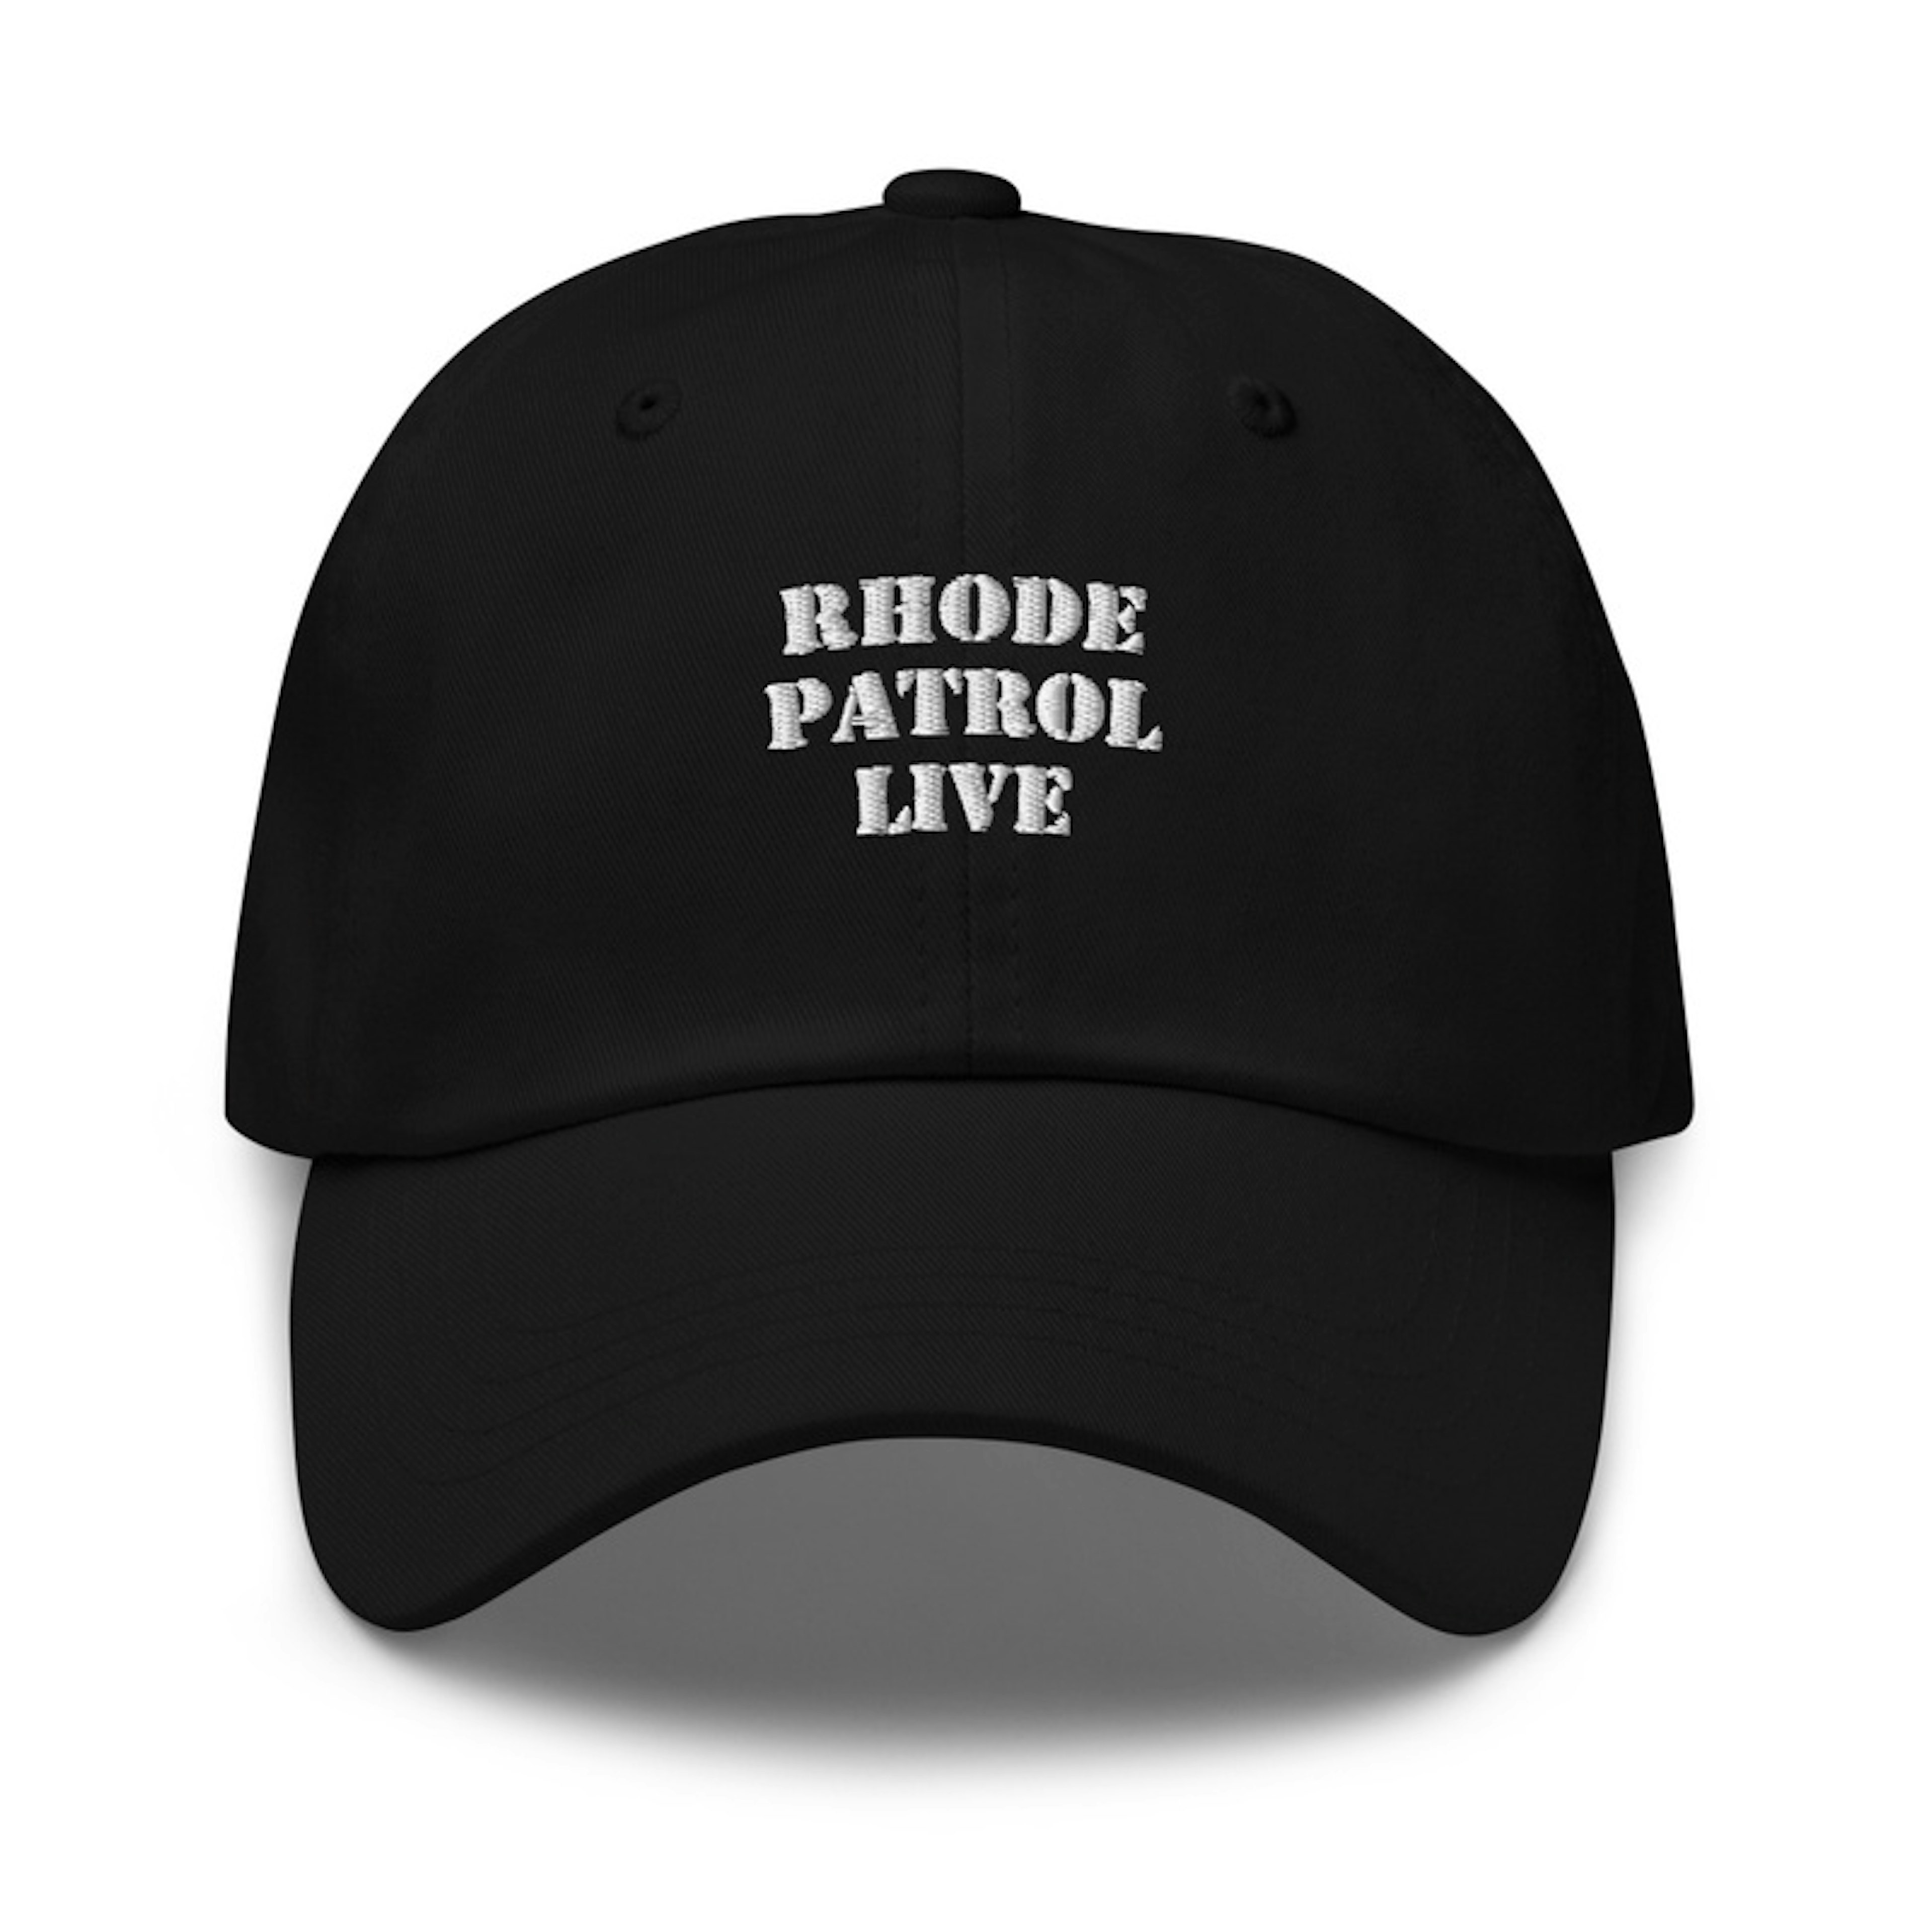 Rhode Patrol Live white cap